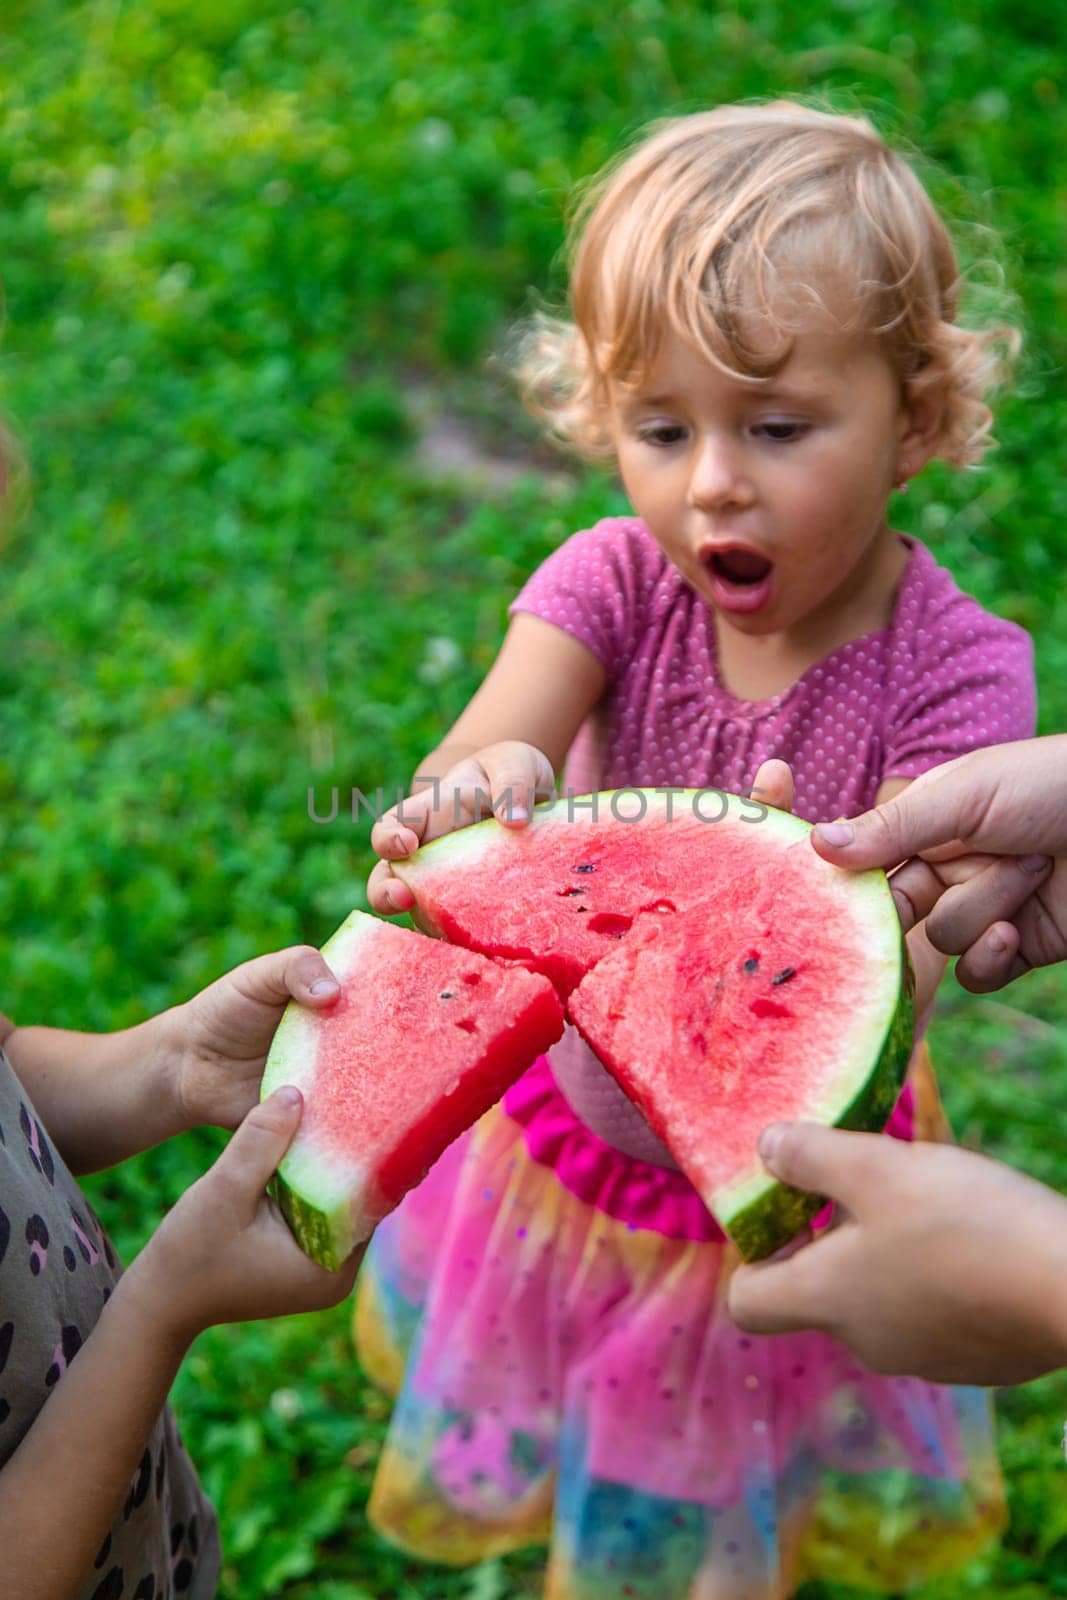 Children in the park eat watermelon. Selective focus. by yanadjana